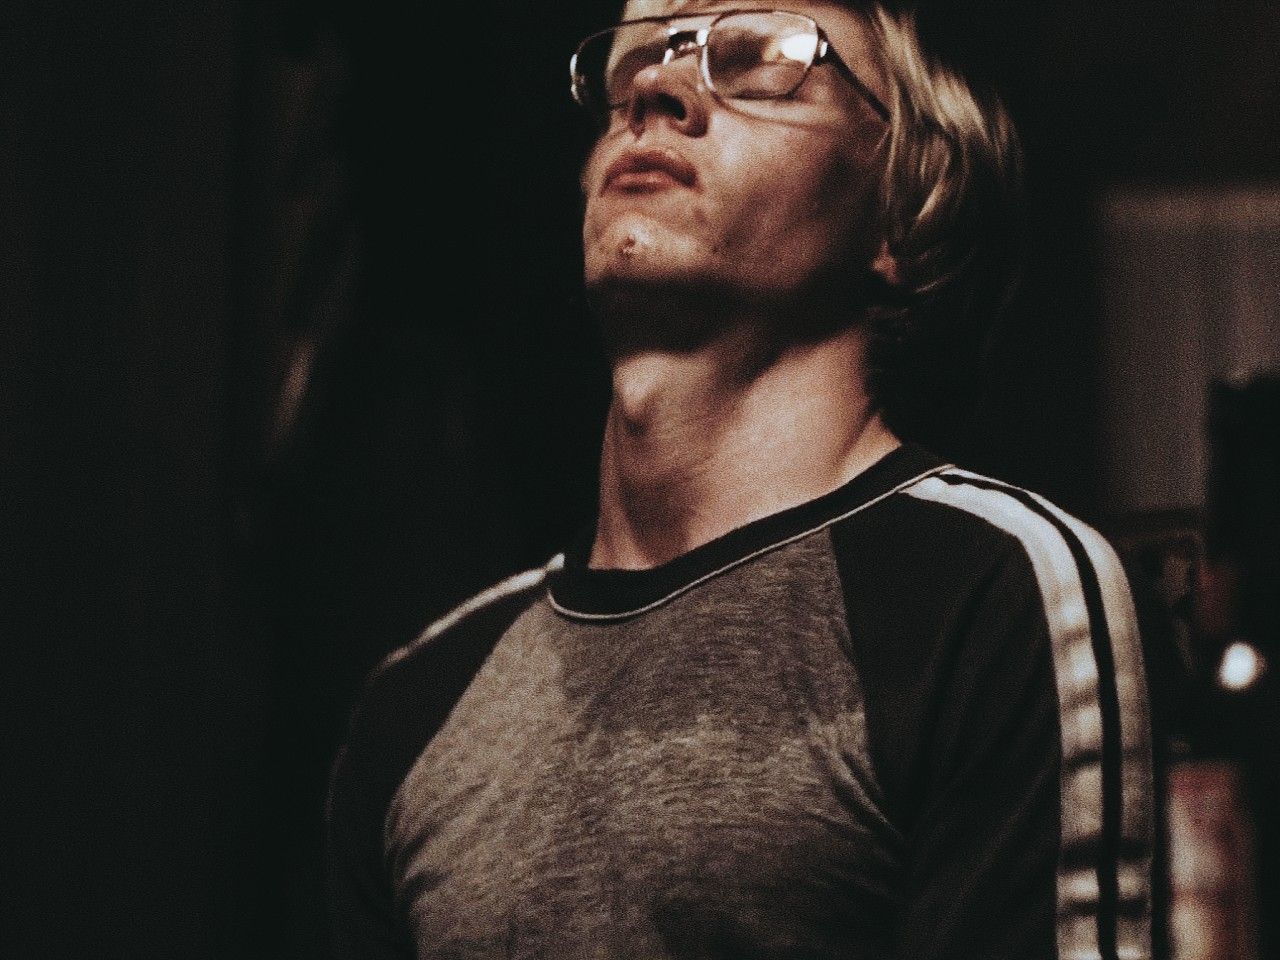 High resolution stills of Evan Peters as Jeffrey Dahmer. Images